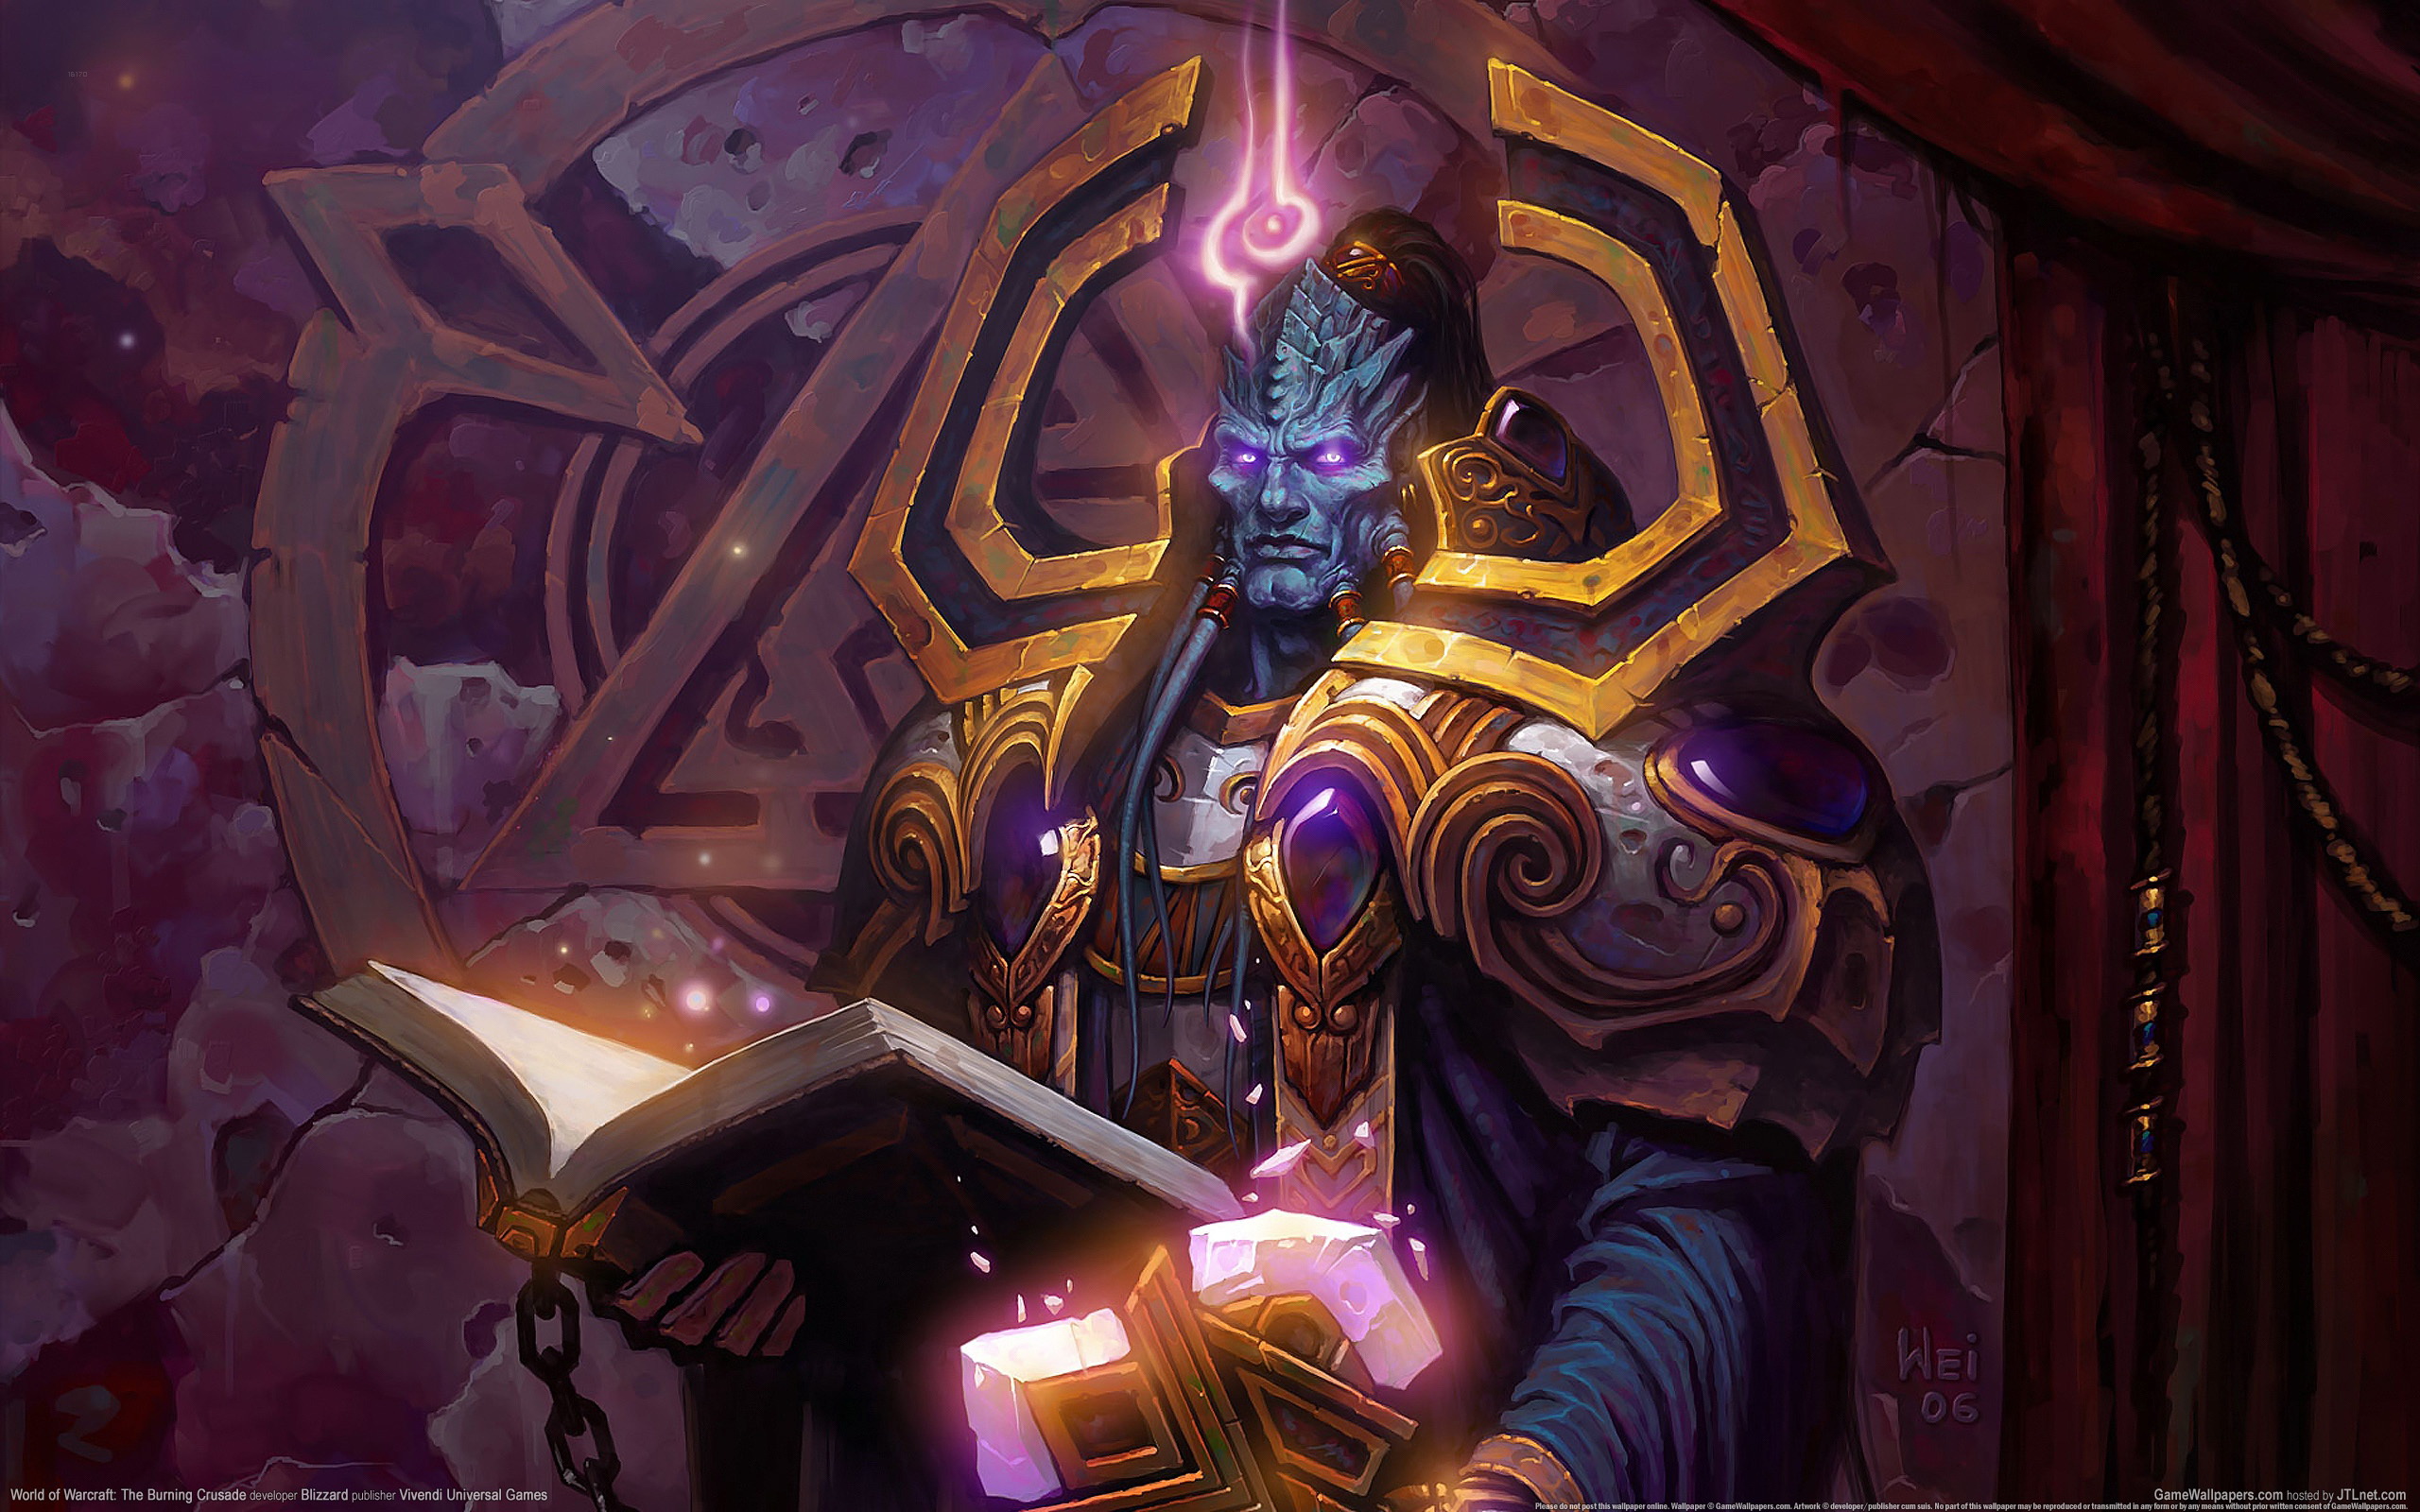 Video Game World Of Warcraft: The Burning Crusade HD Wallpaper | Background Image